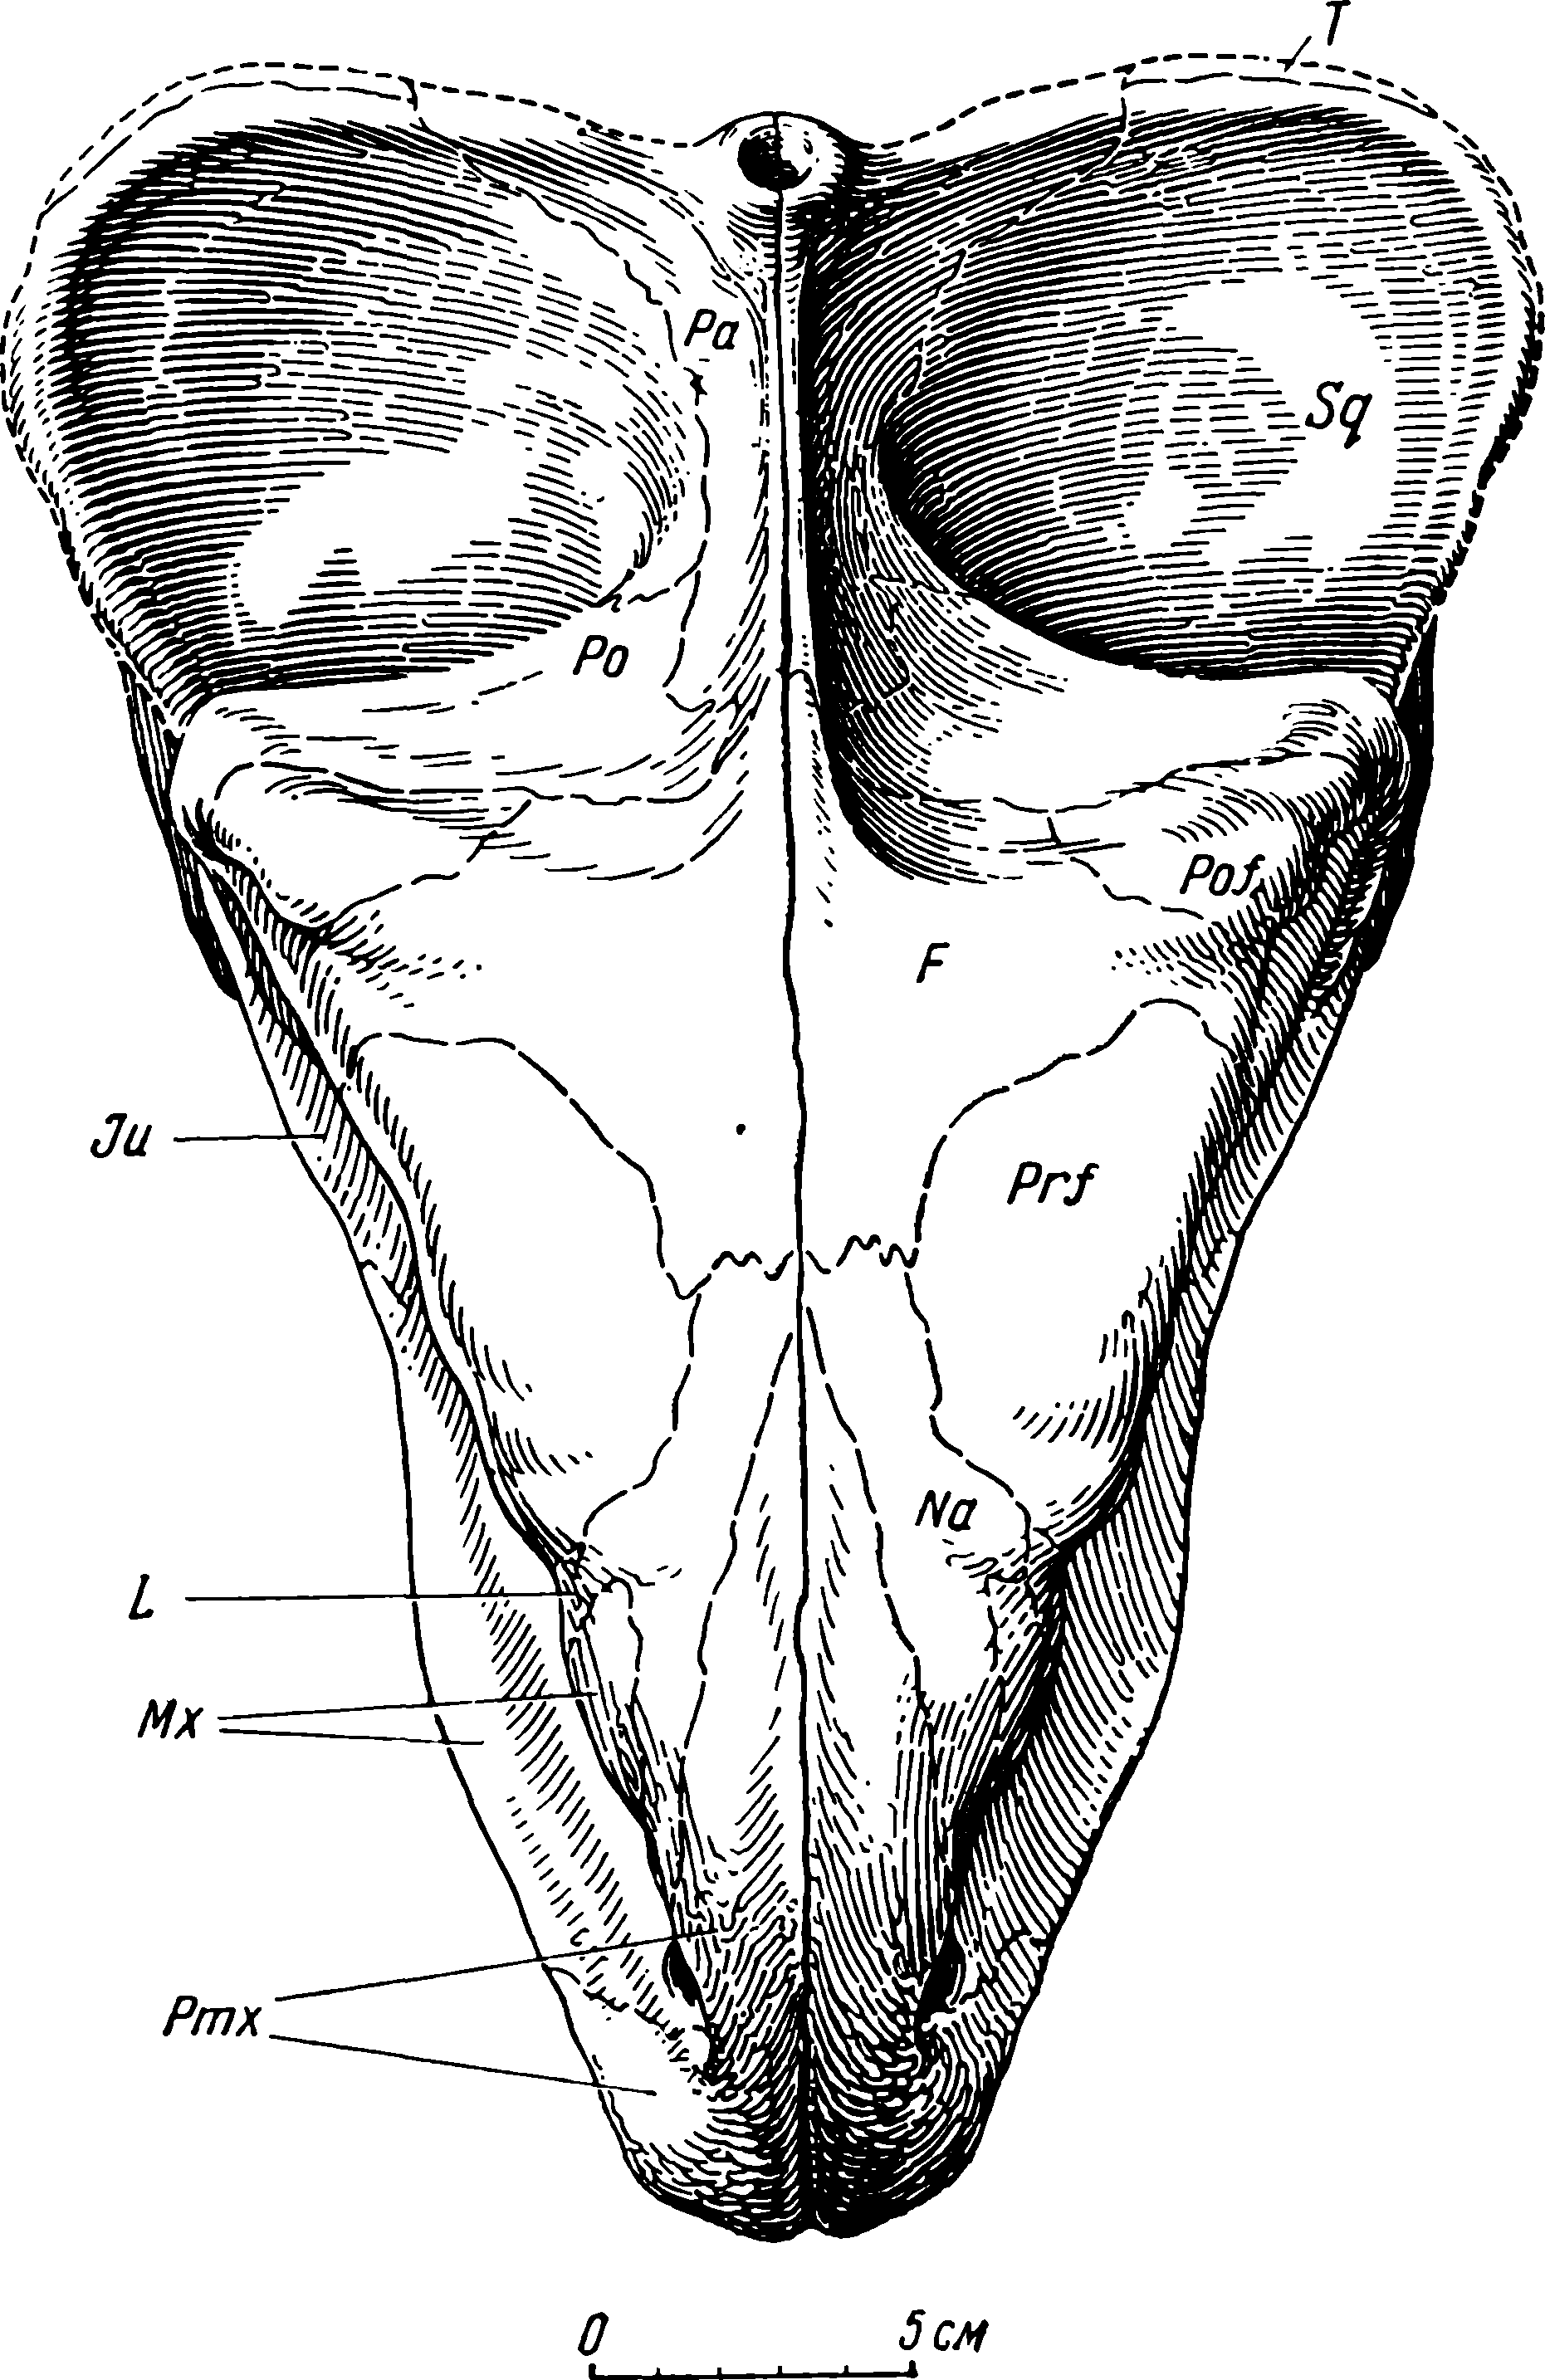 Рис. 3. Реконструкция черепа дейтерозавра — Deuterоsaurus biarmicus Eichw. Дорсальная поверхность. Pmx — praemaxillare; Mx — maxillare; Na — nasale; L — lacrymale; Prf — praefrontale; F — frontale; Pof — postfrontale; Po — postorbitale; Ju — jugale; Pa — parietale; Sq — squamosum; T — tabulare